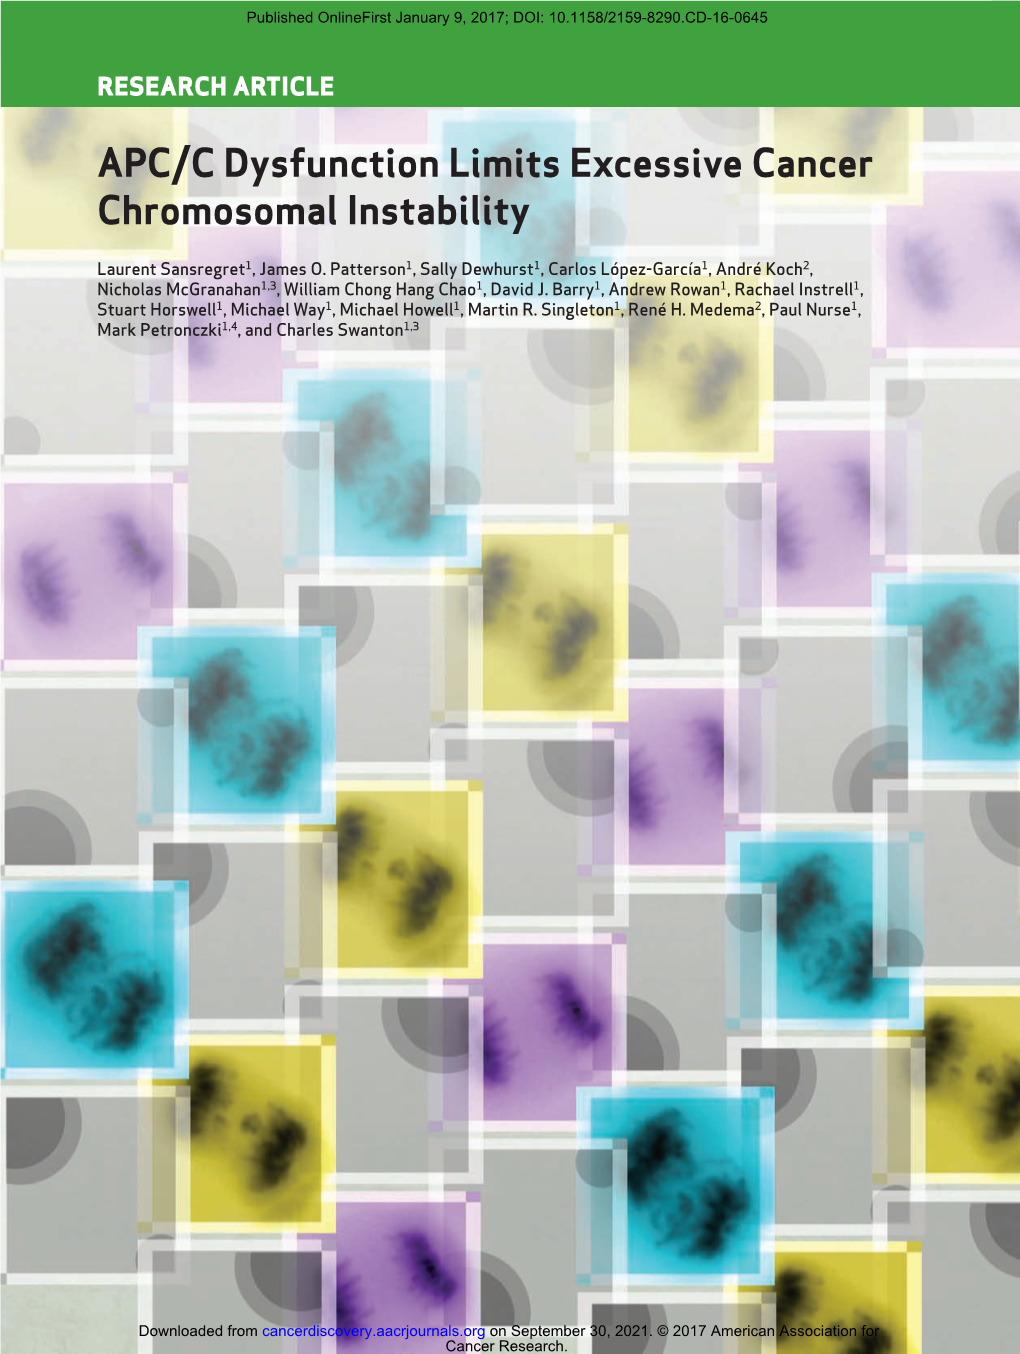 APC/C Dysfunction Limits Excessive Cancer Chromosomal Instability